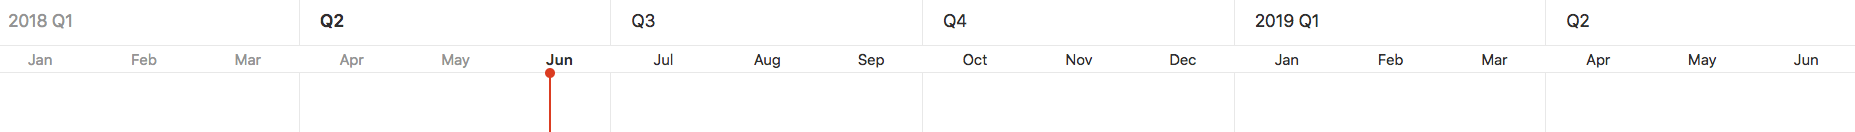 roadmap date range in quarters